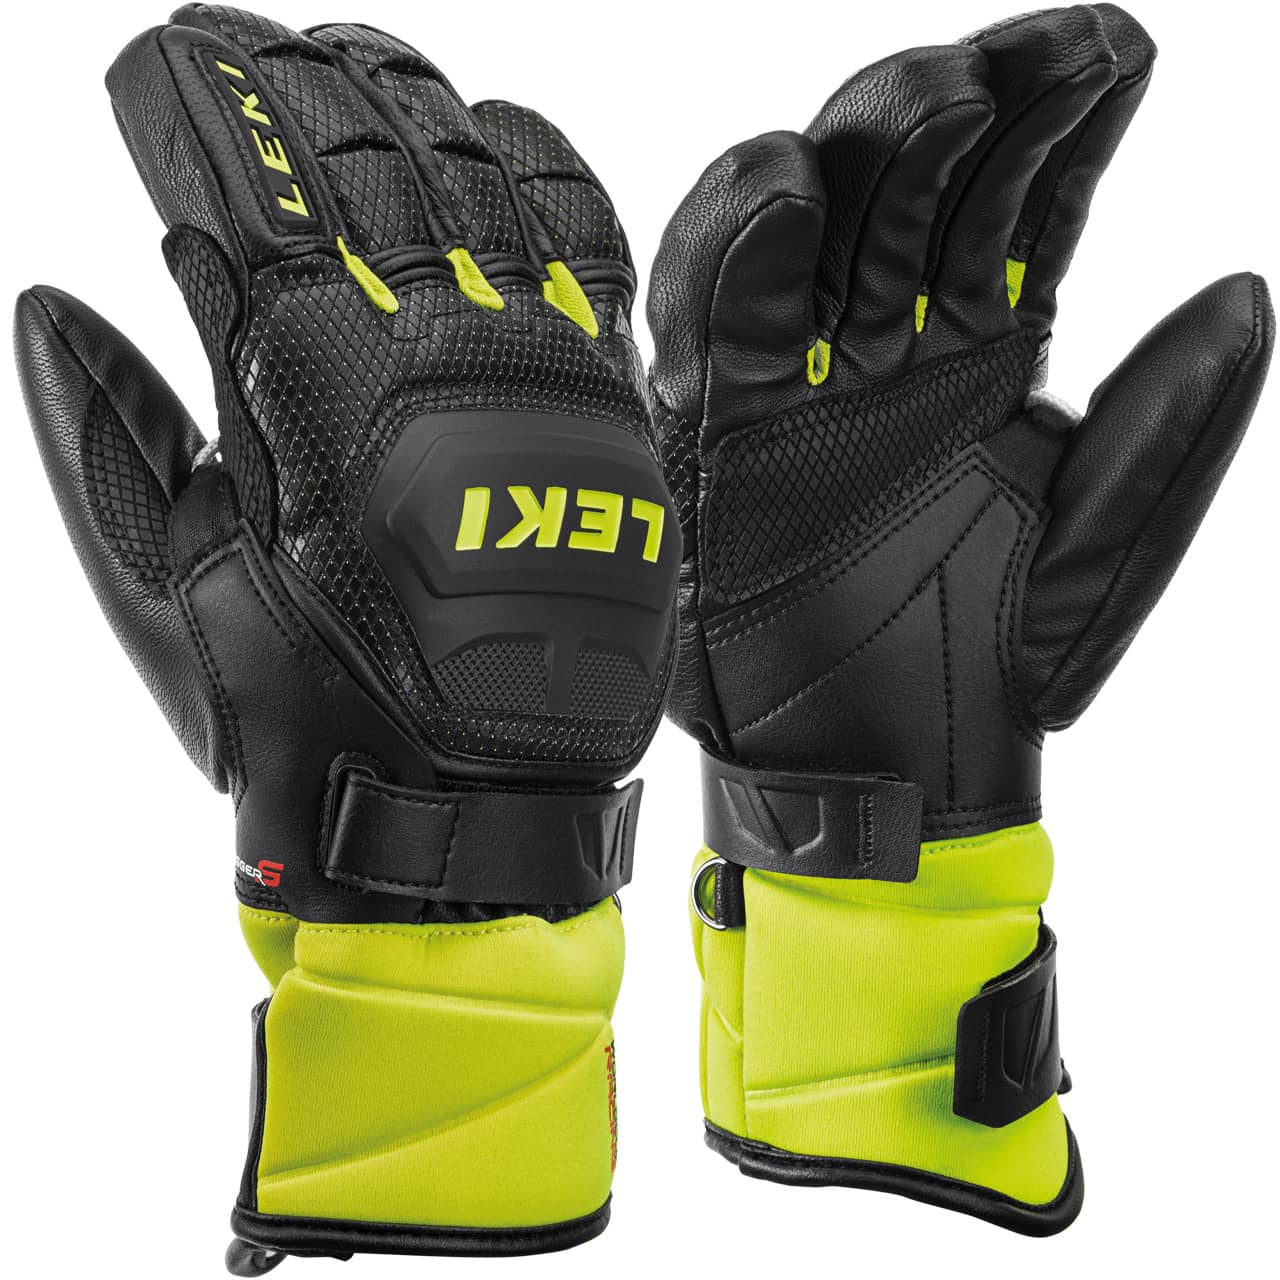 escaleren Aanpassing gerucht Leki Junior Glove RACE FLEX S black/ice lemon |Leki Gloves | Leki | L |  BRANDS | XSPO.com